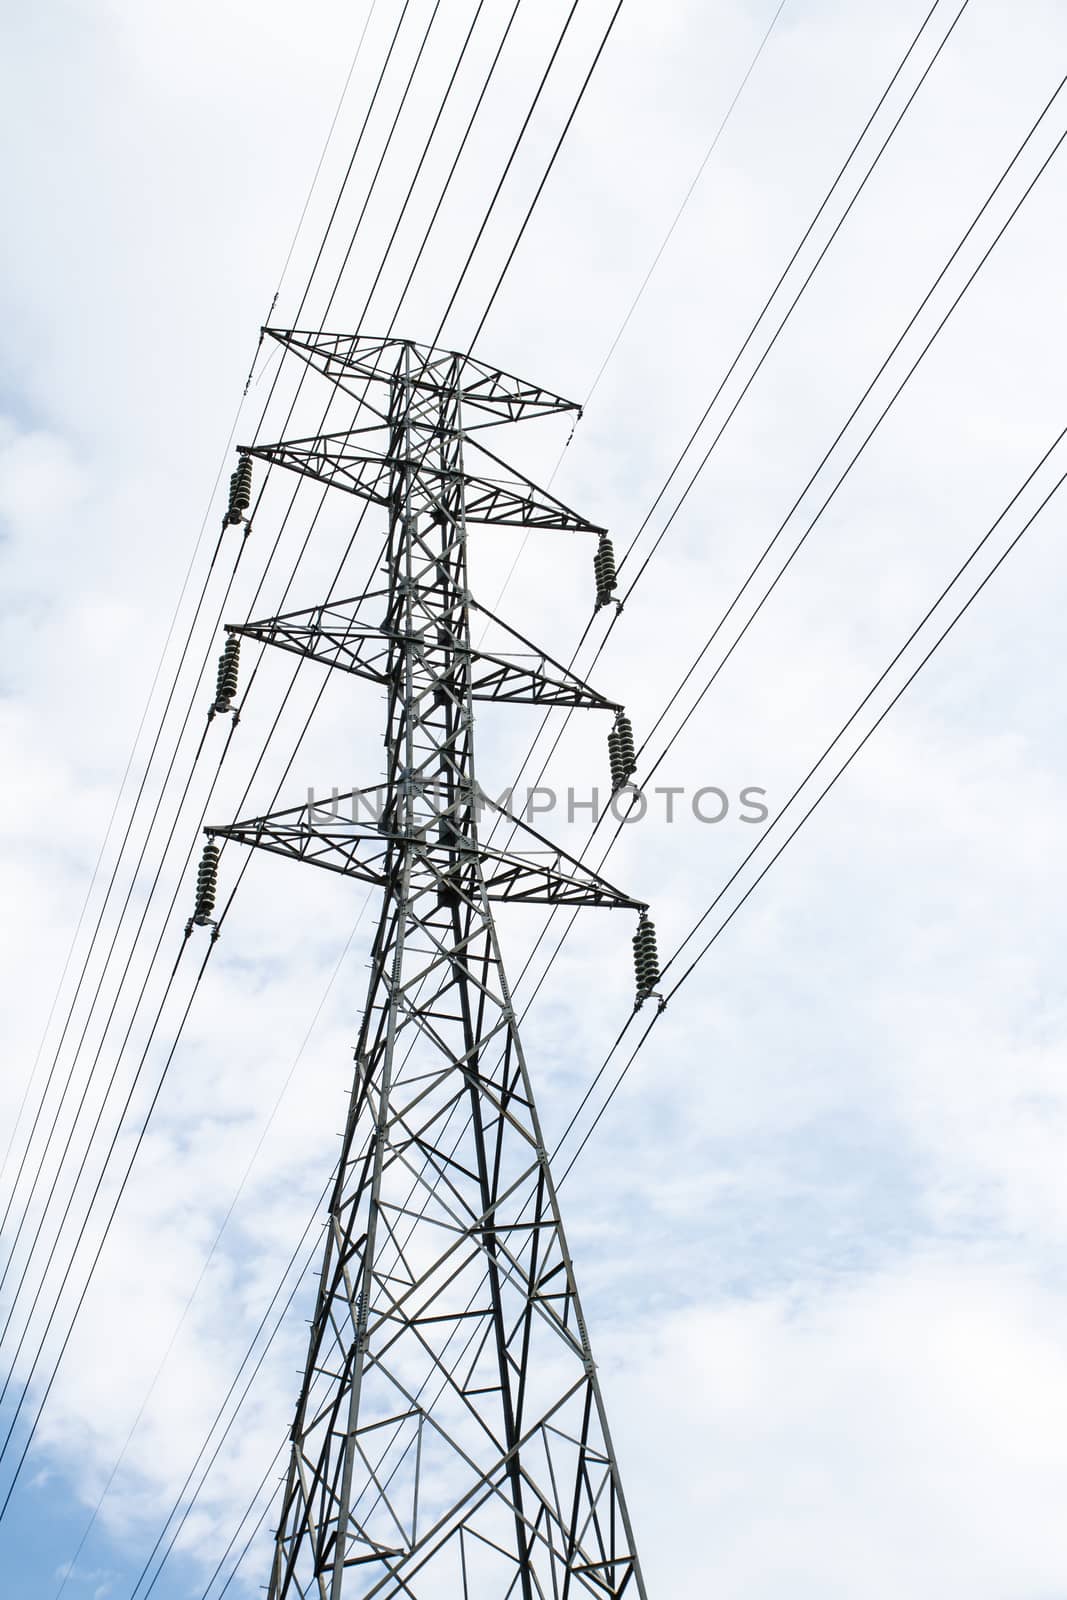 High voltage transmission tower by kasinv